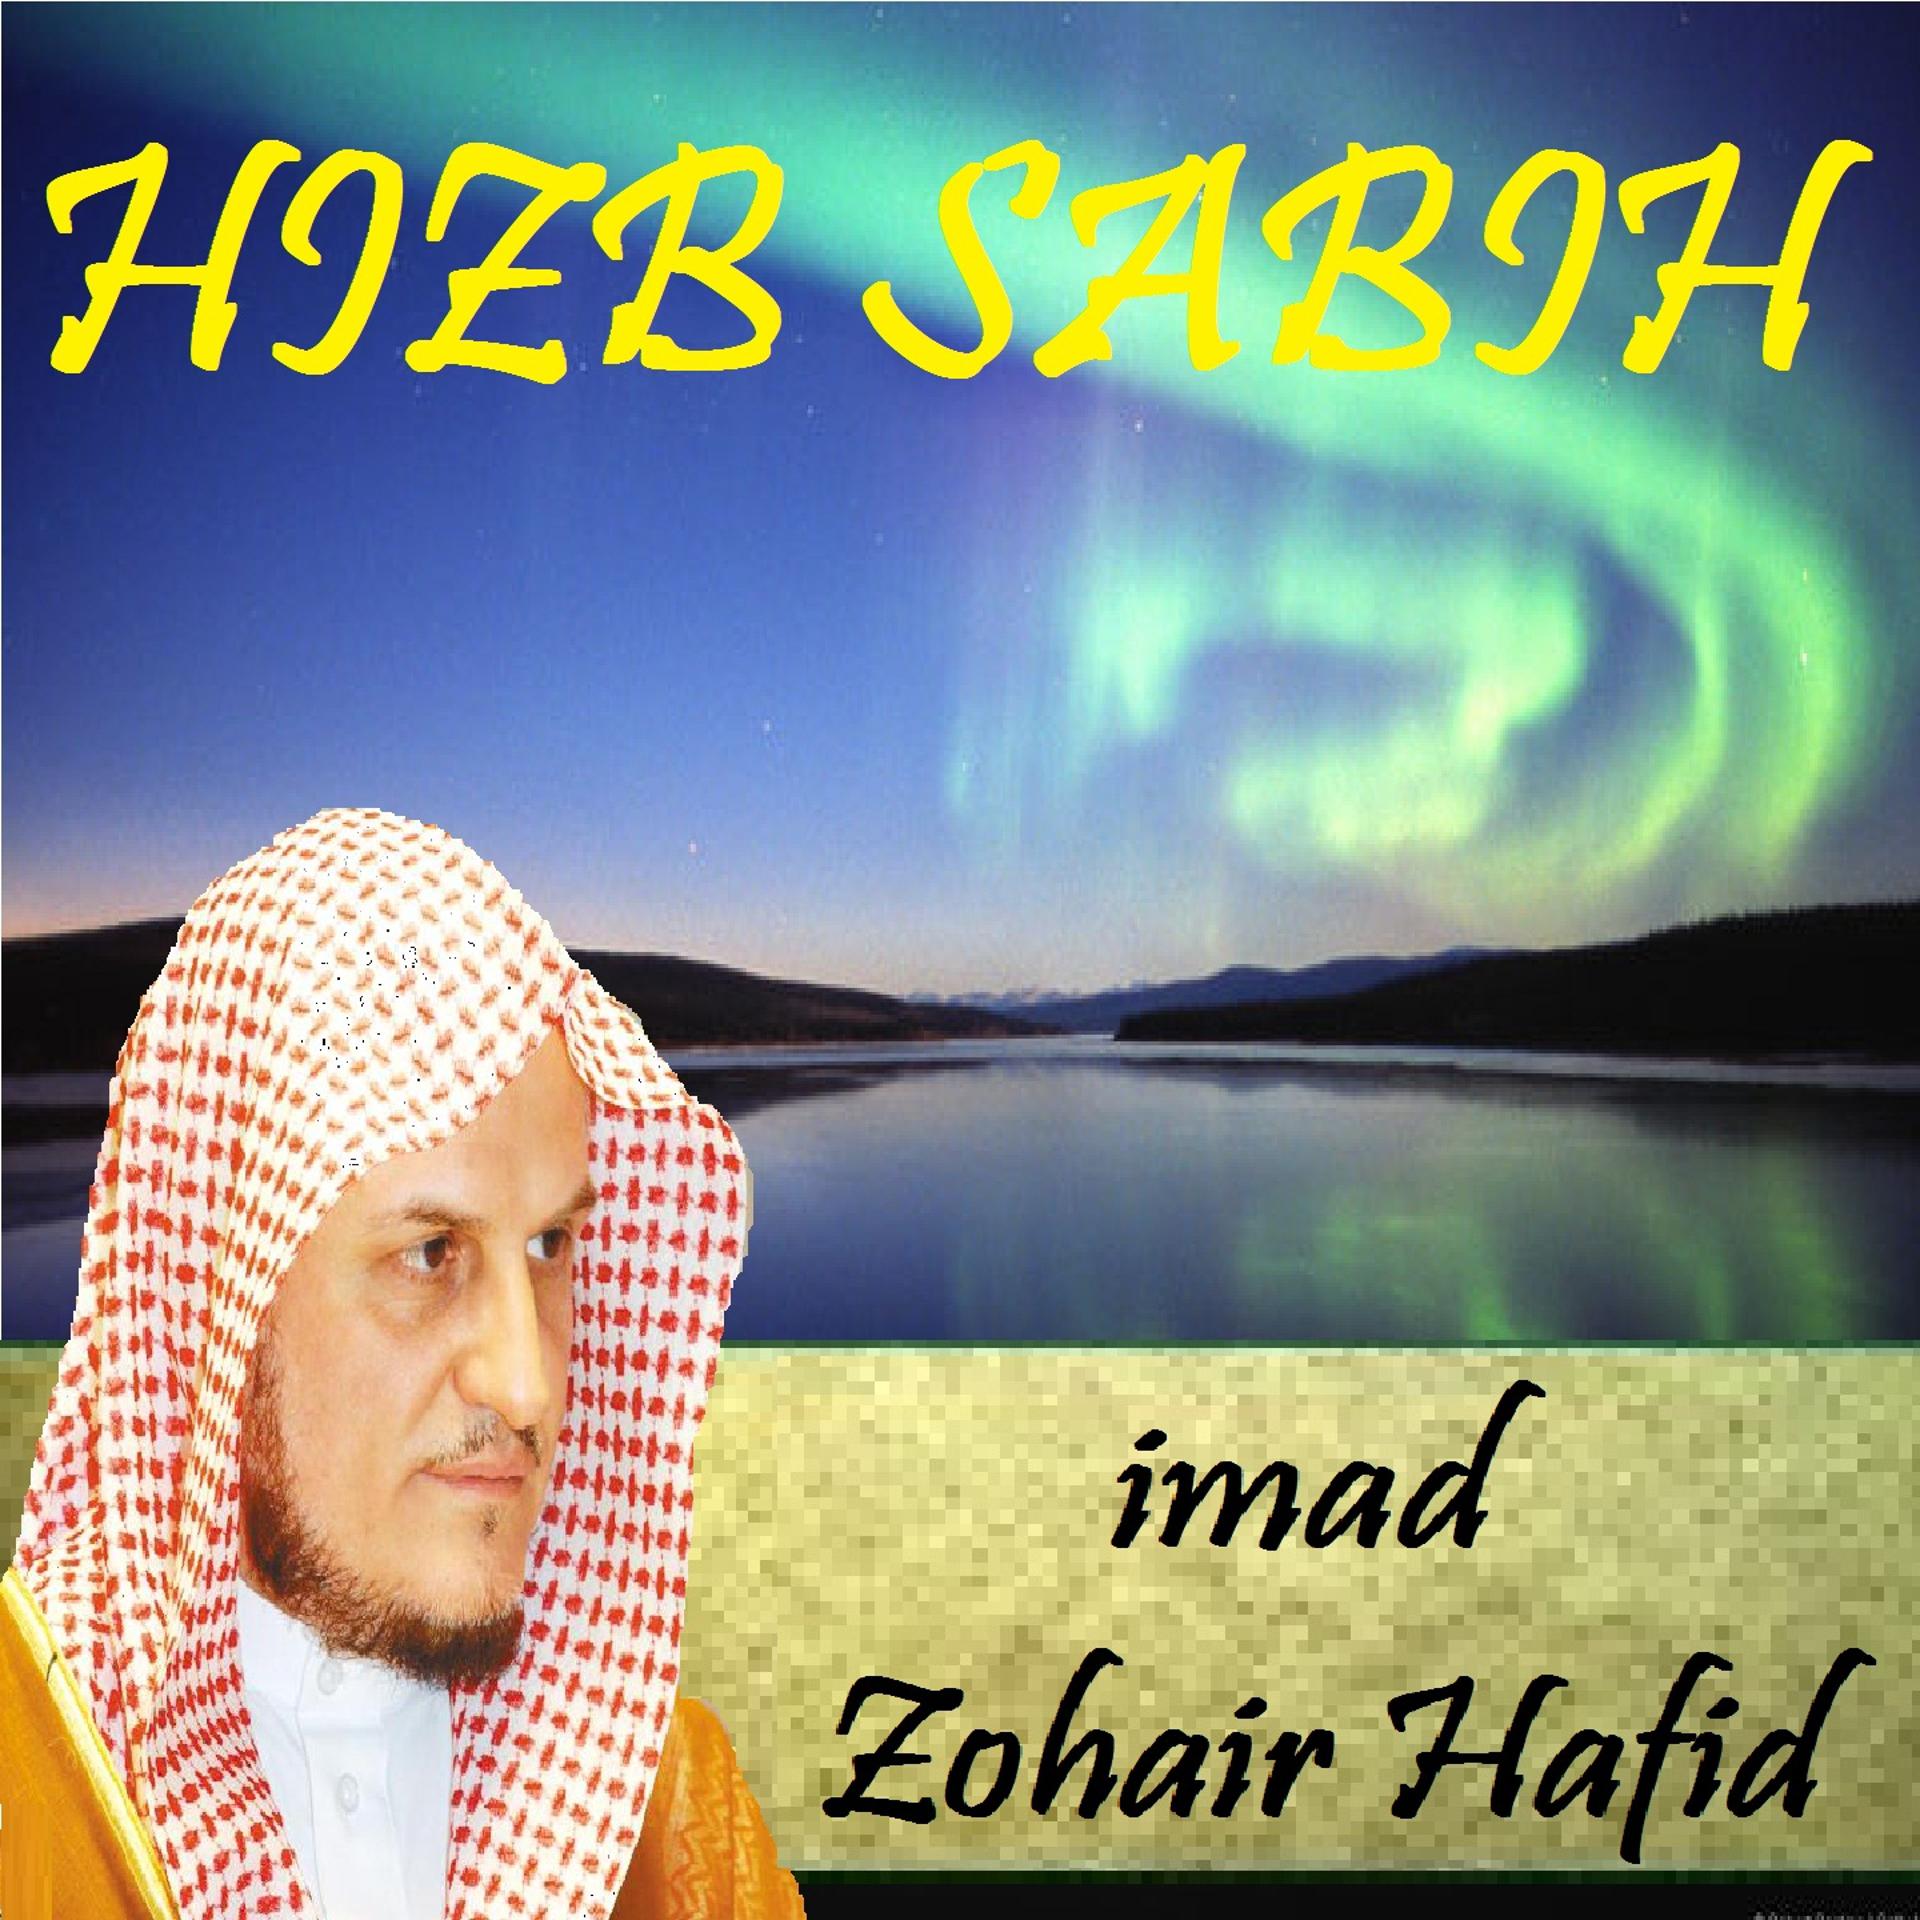 Постер альбома HIZB SABIH